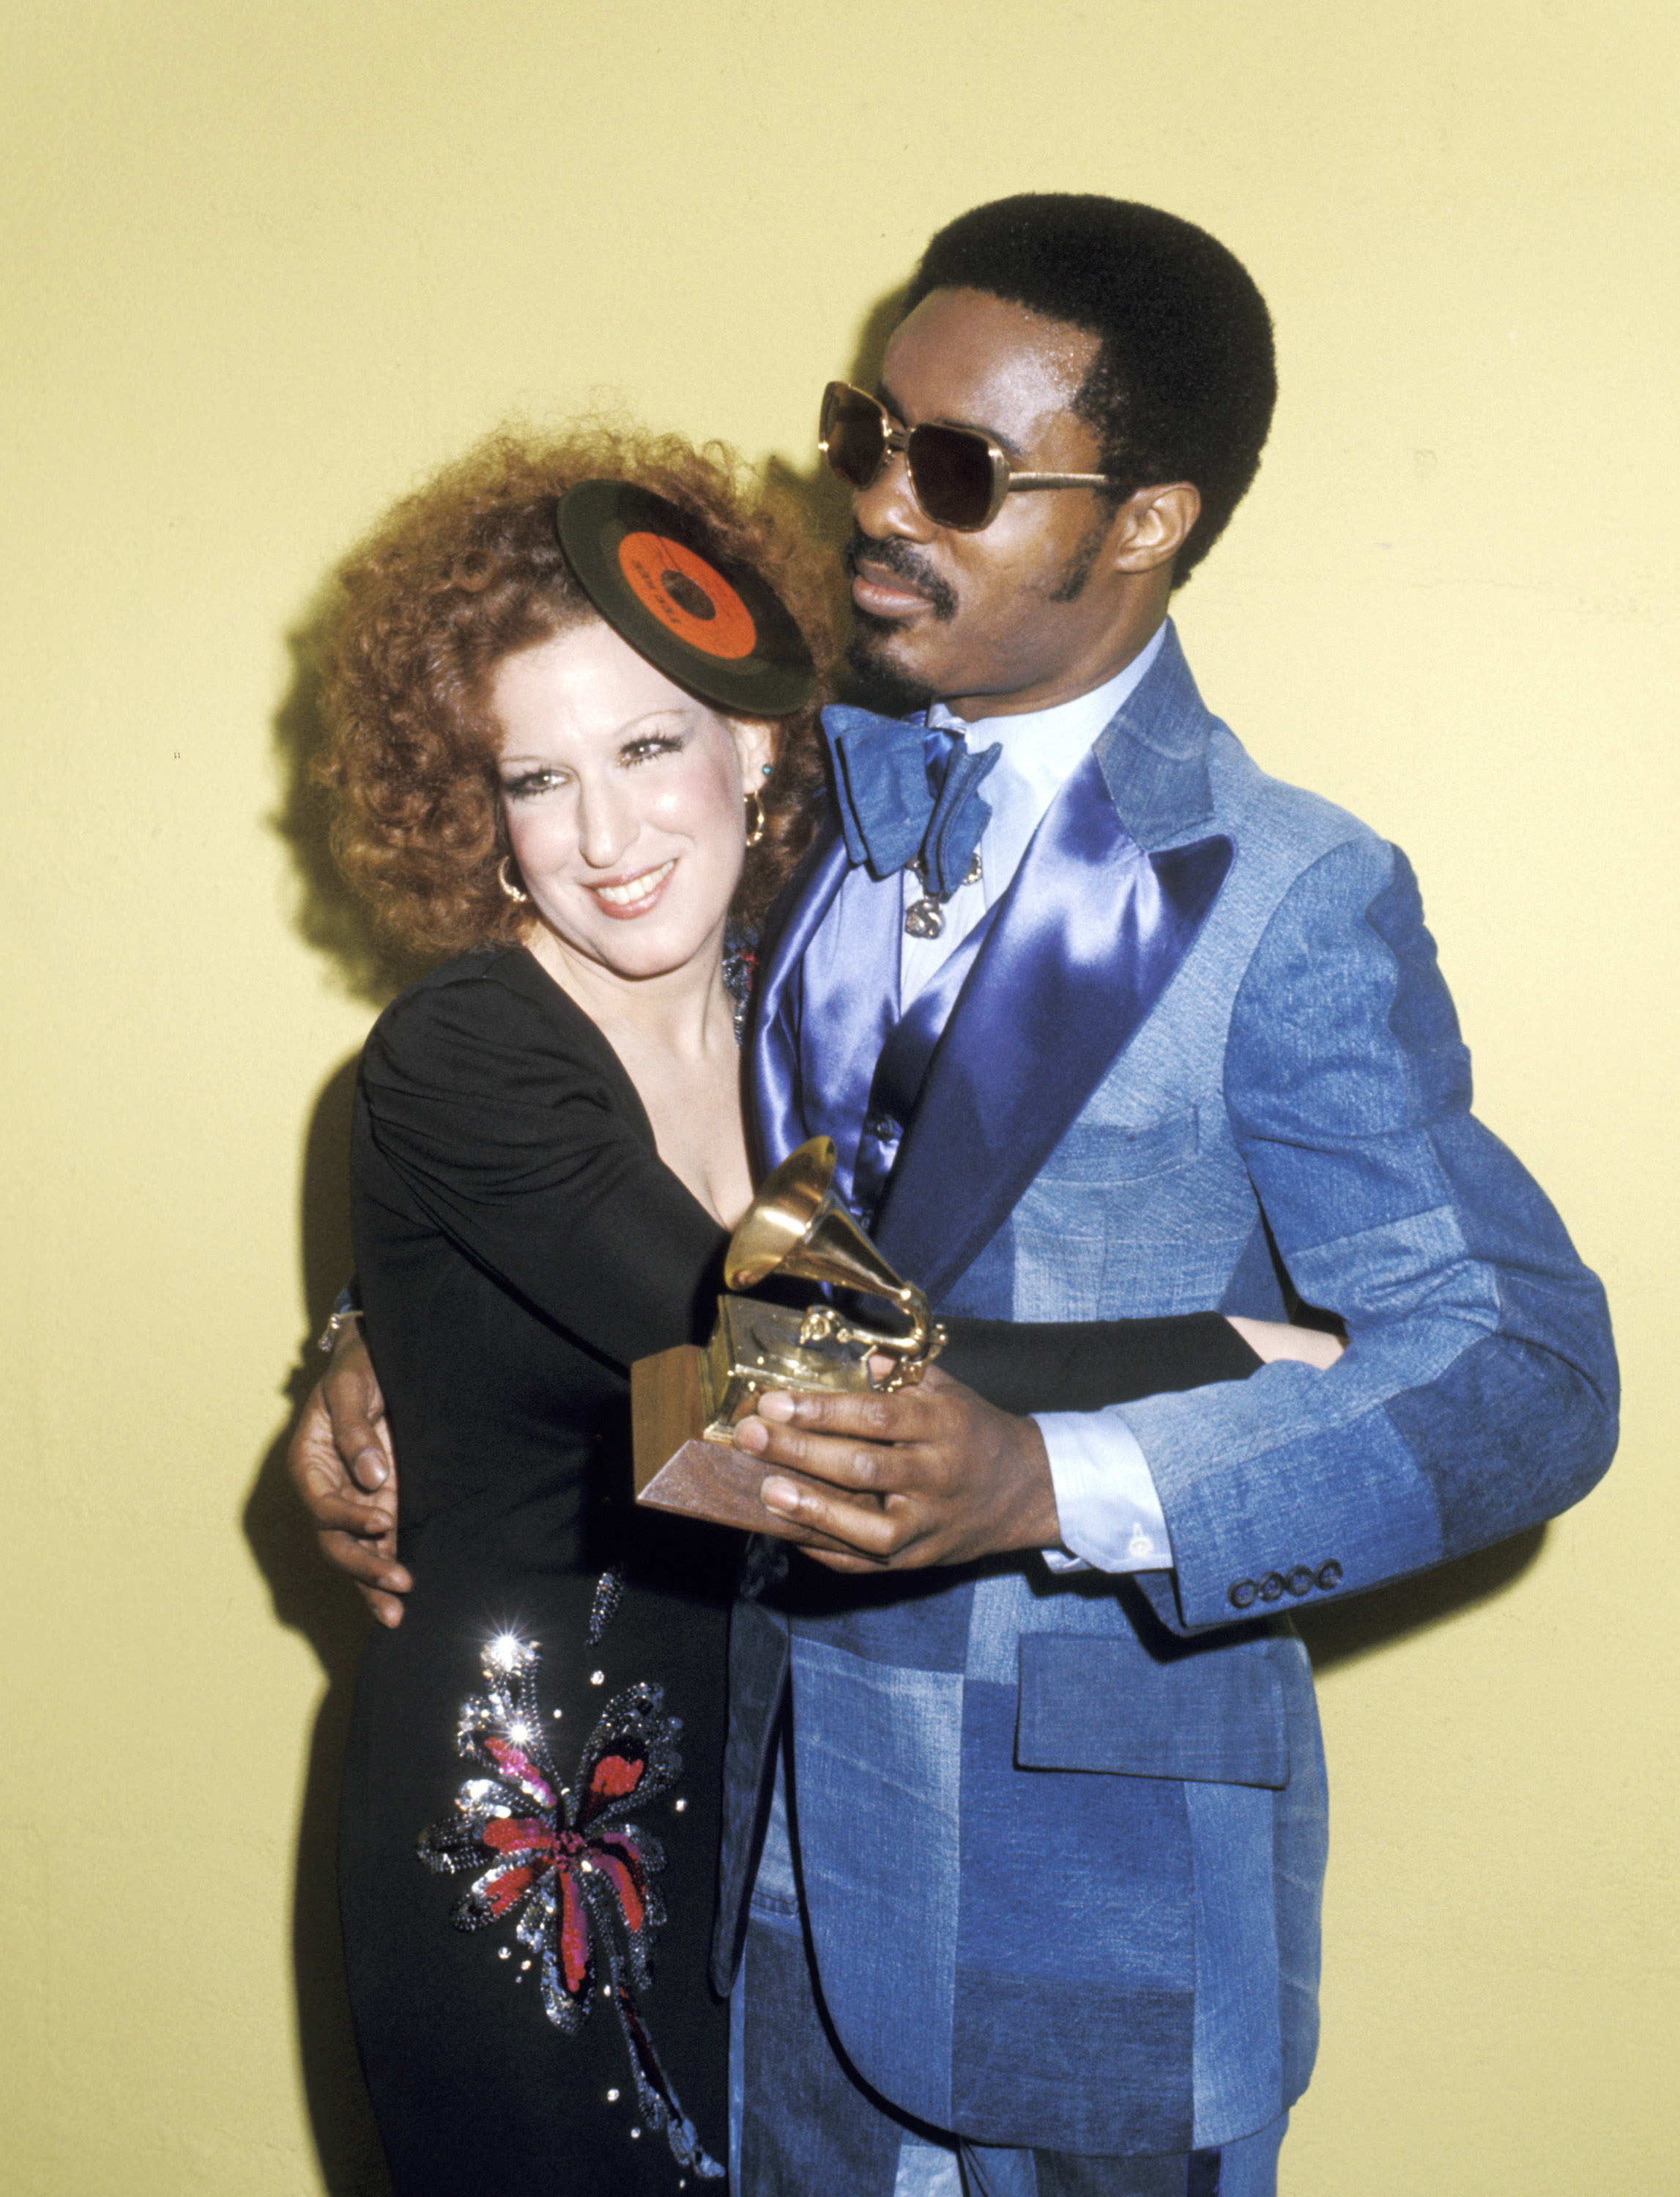 Bette Midler and Stevie Wonder at the Grammys 1975